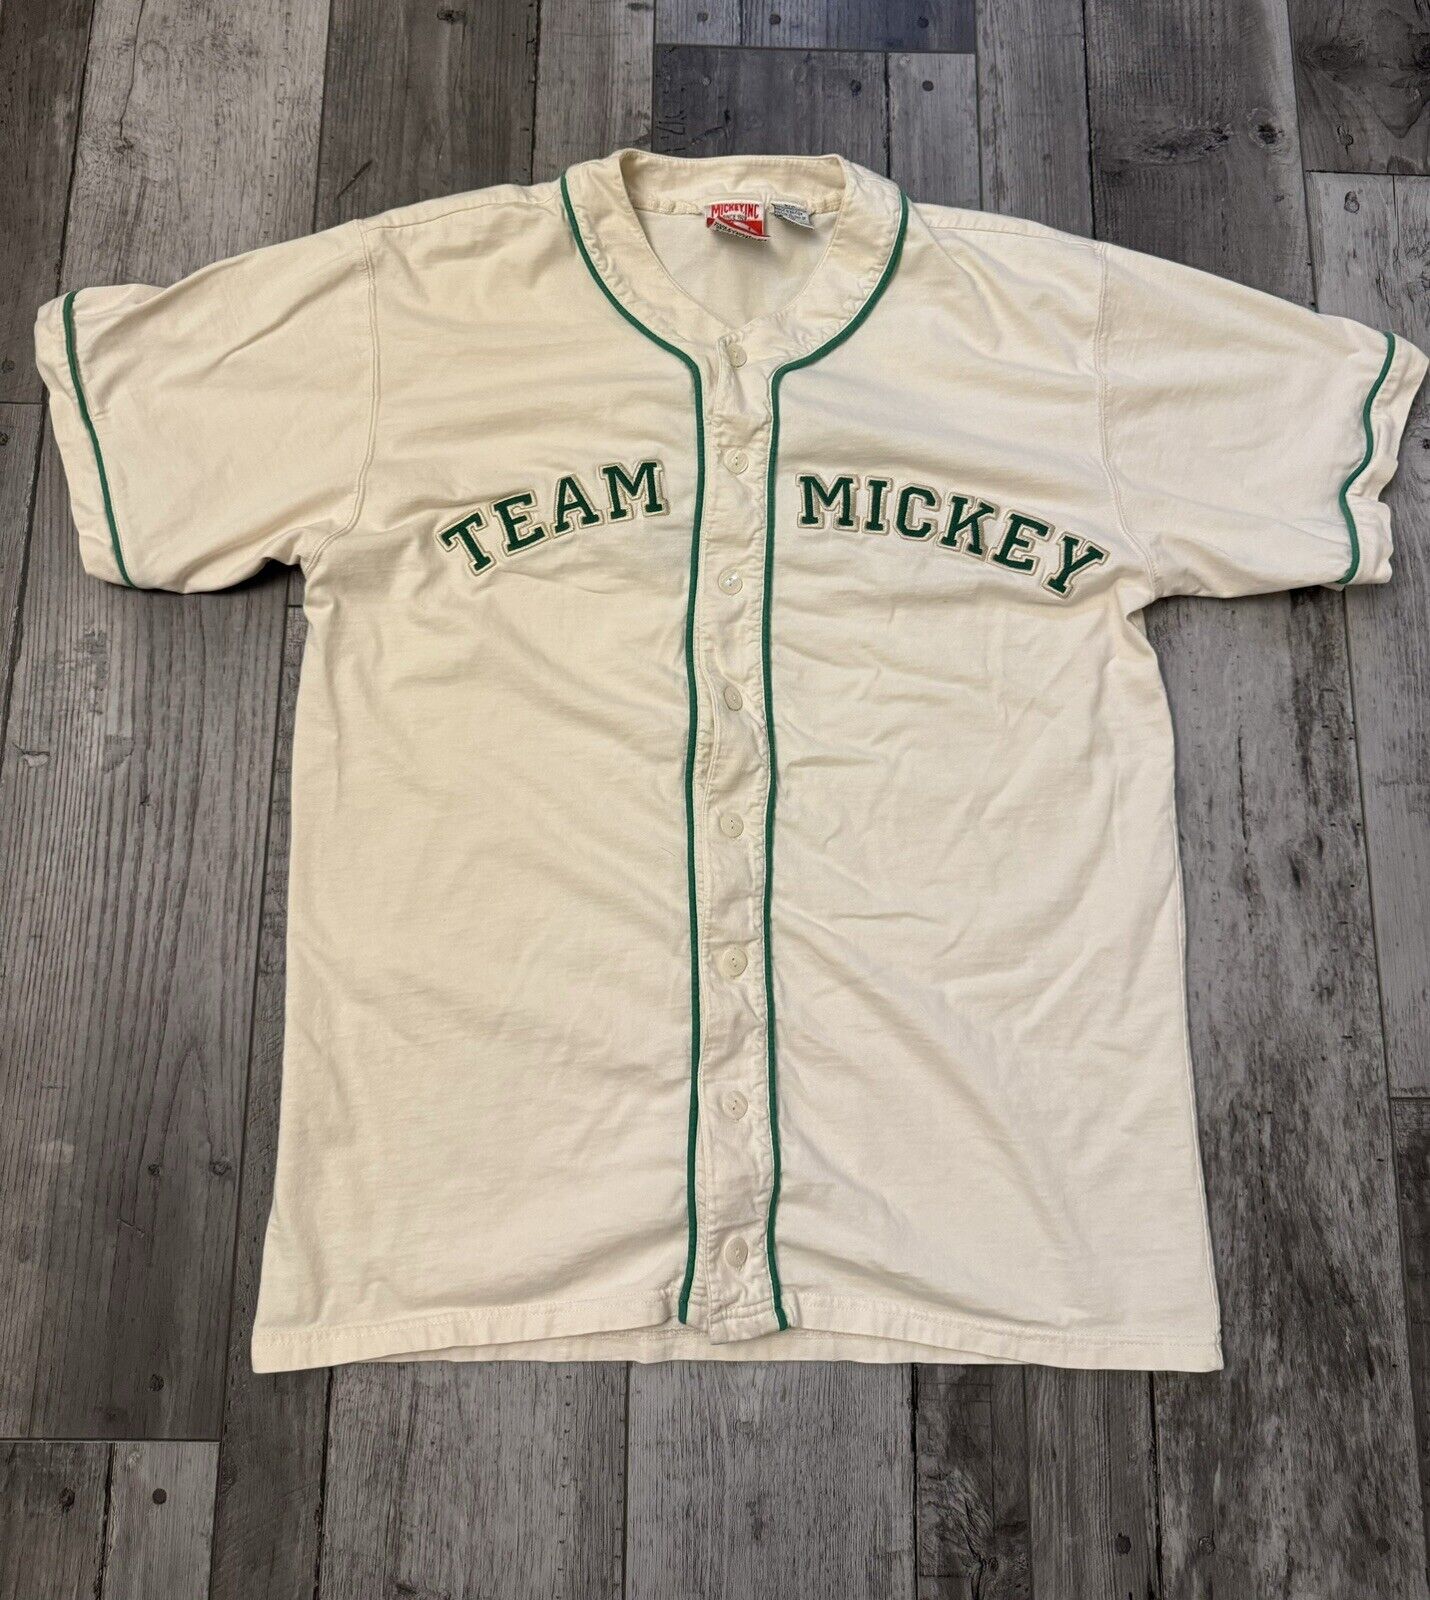 VTG 90s Disney Team Mickey Embroidered Baseball Jersey T-shirt Size S/M Vintage